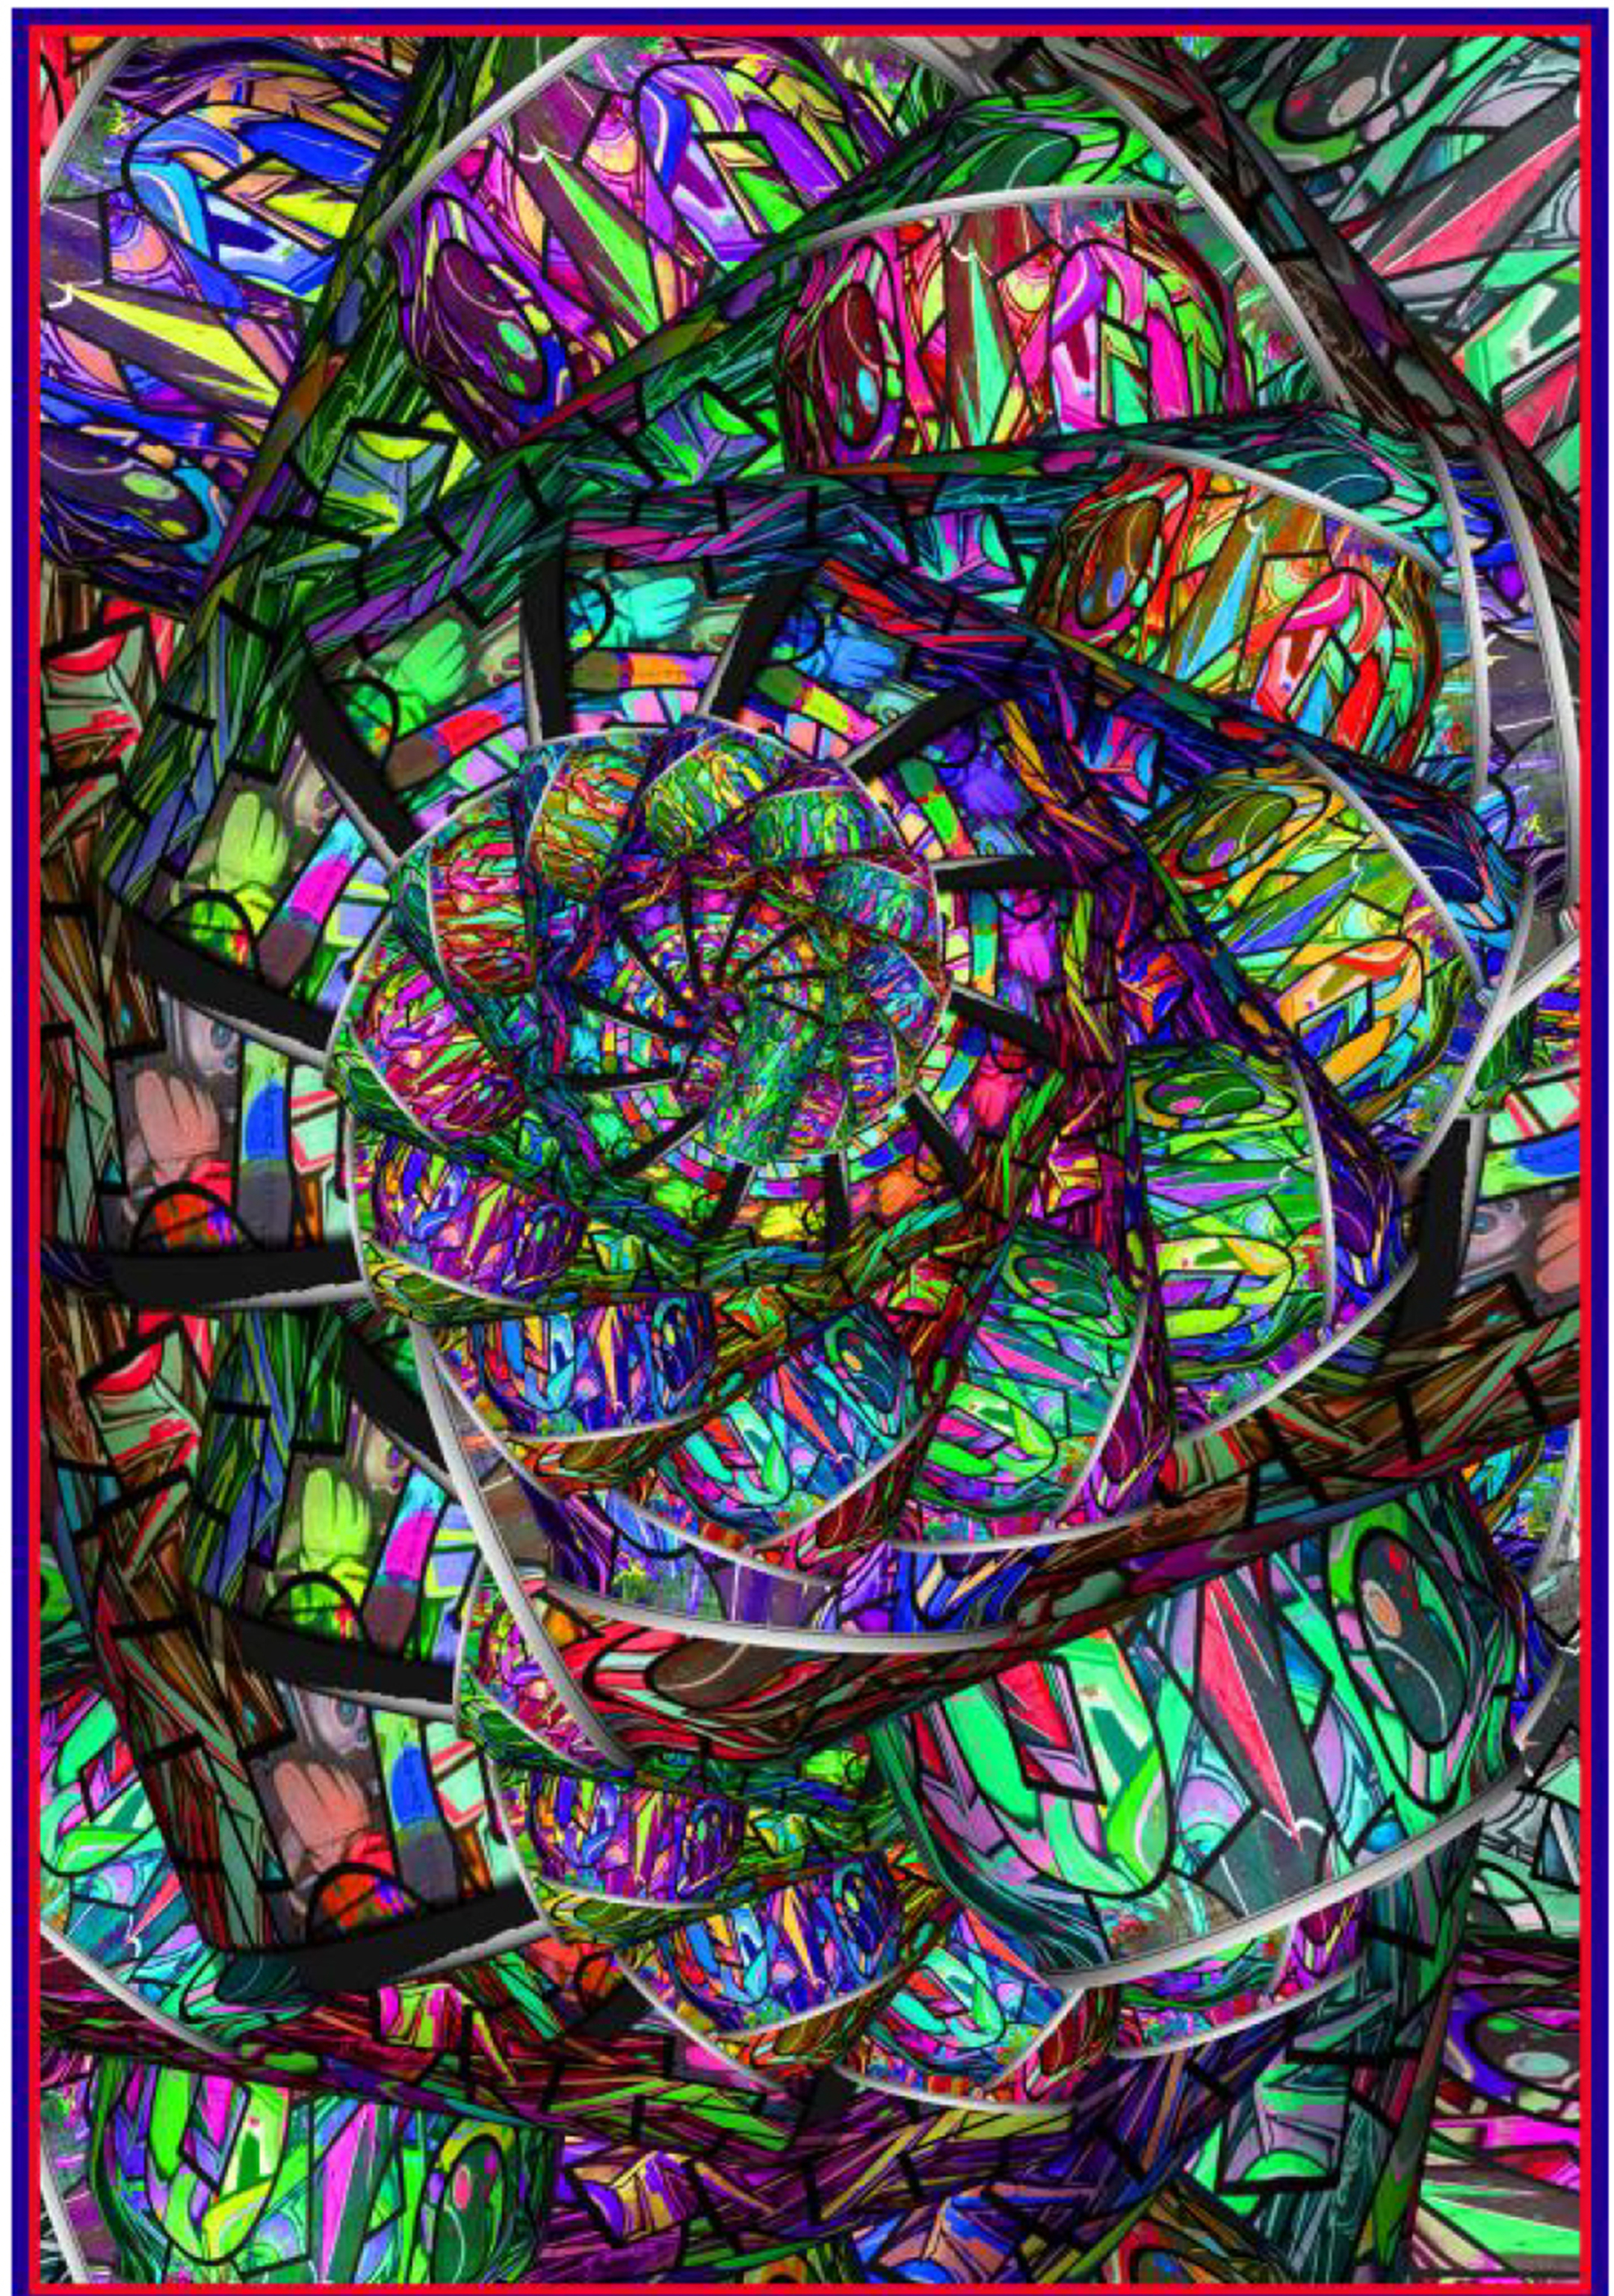 Kaleidoscopic graffiti created to look like a spiral